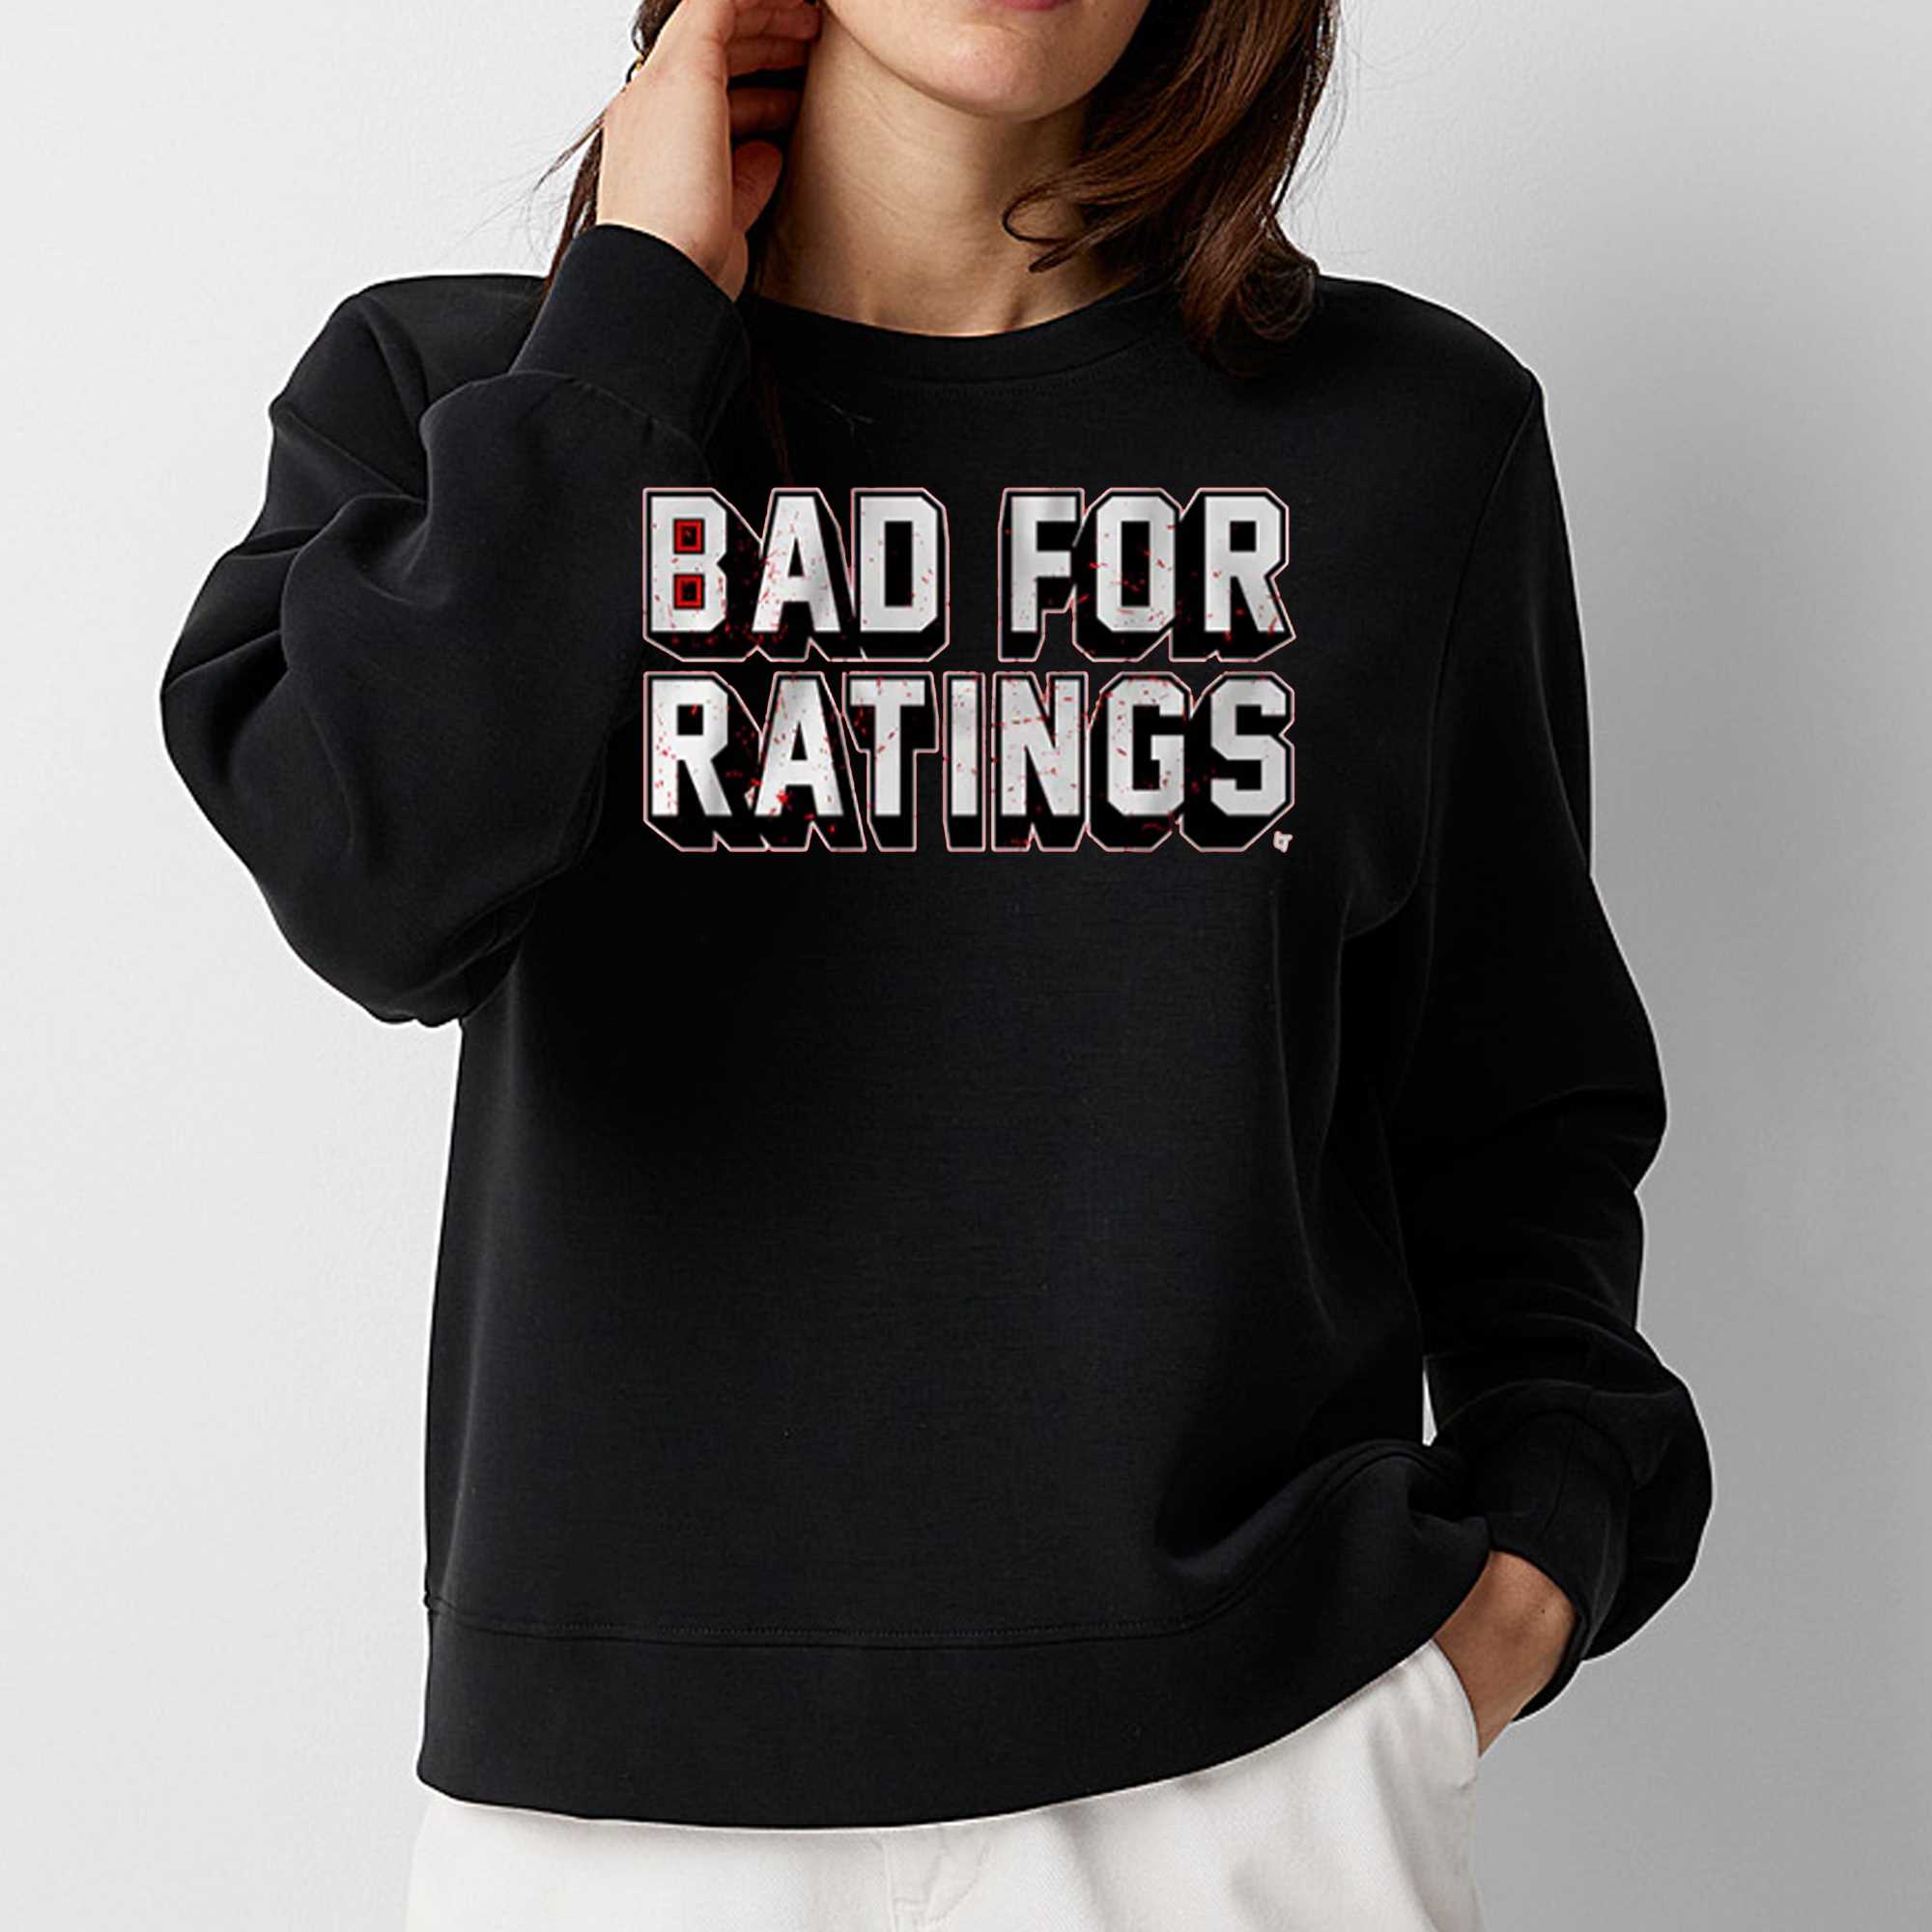 Bad For Ratings Shirt 